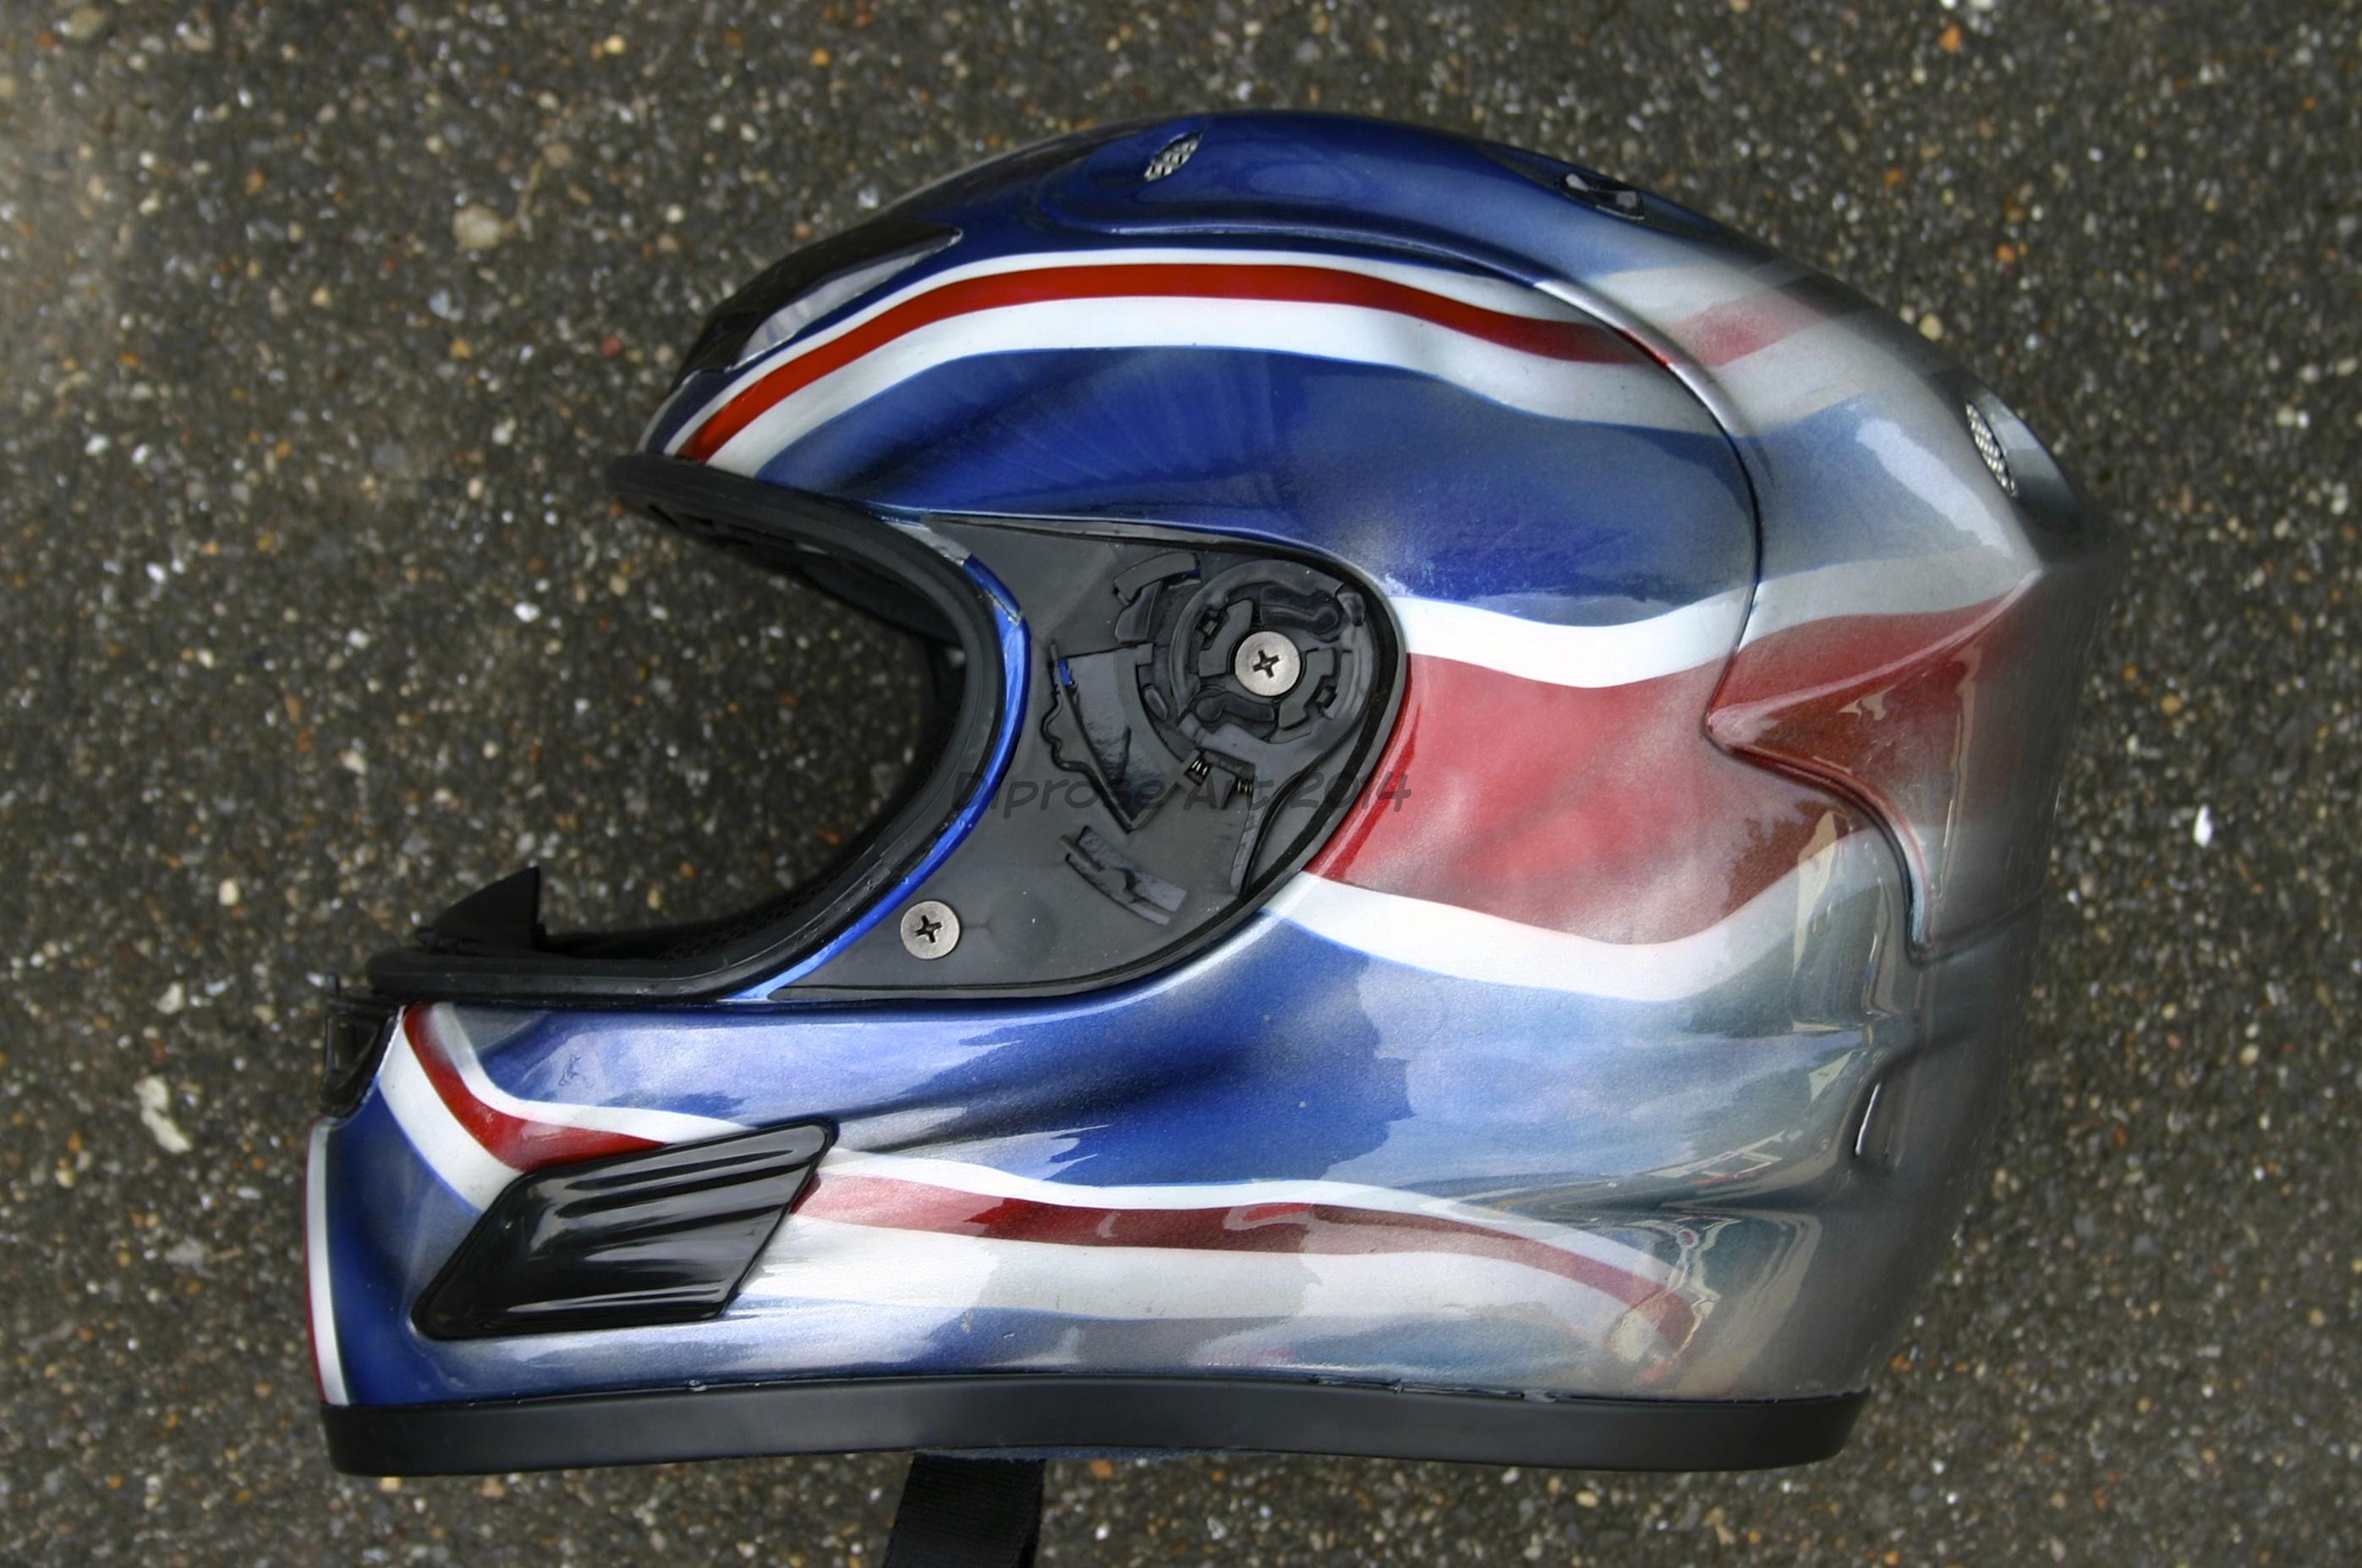 automotive customisation - Crash helmet - Union Jack flag wavy design - all over lid.